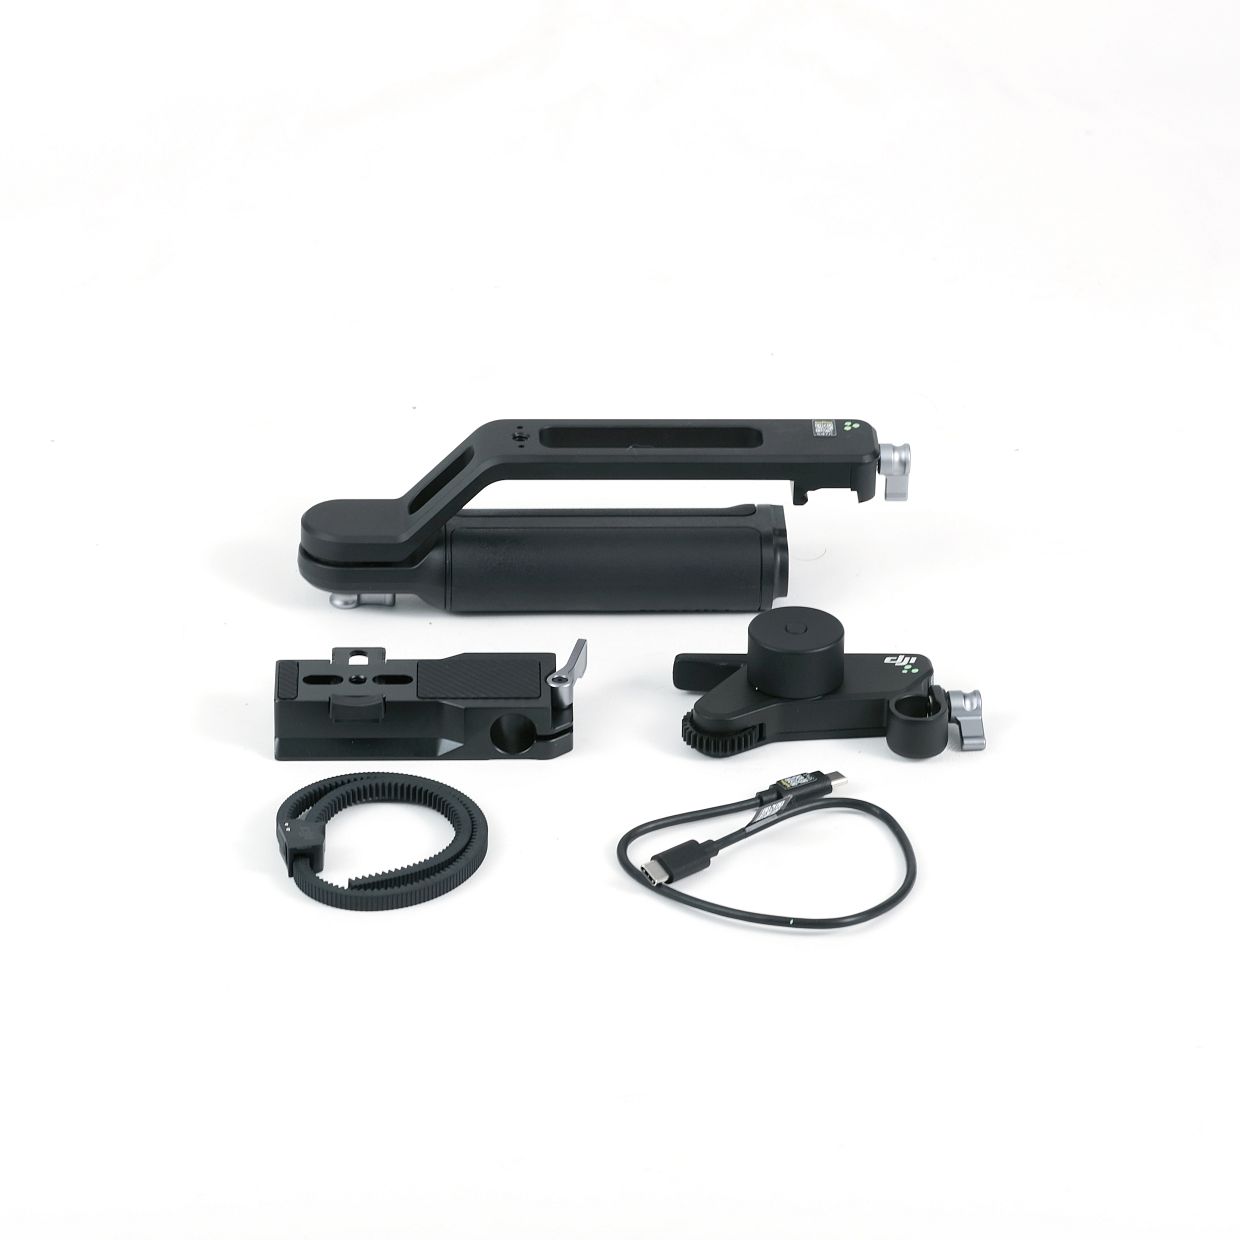 DJI RS4 combo kit (Focus motor kit, Briefcase handle)